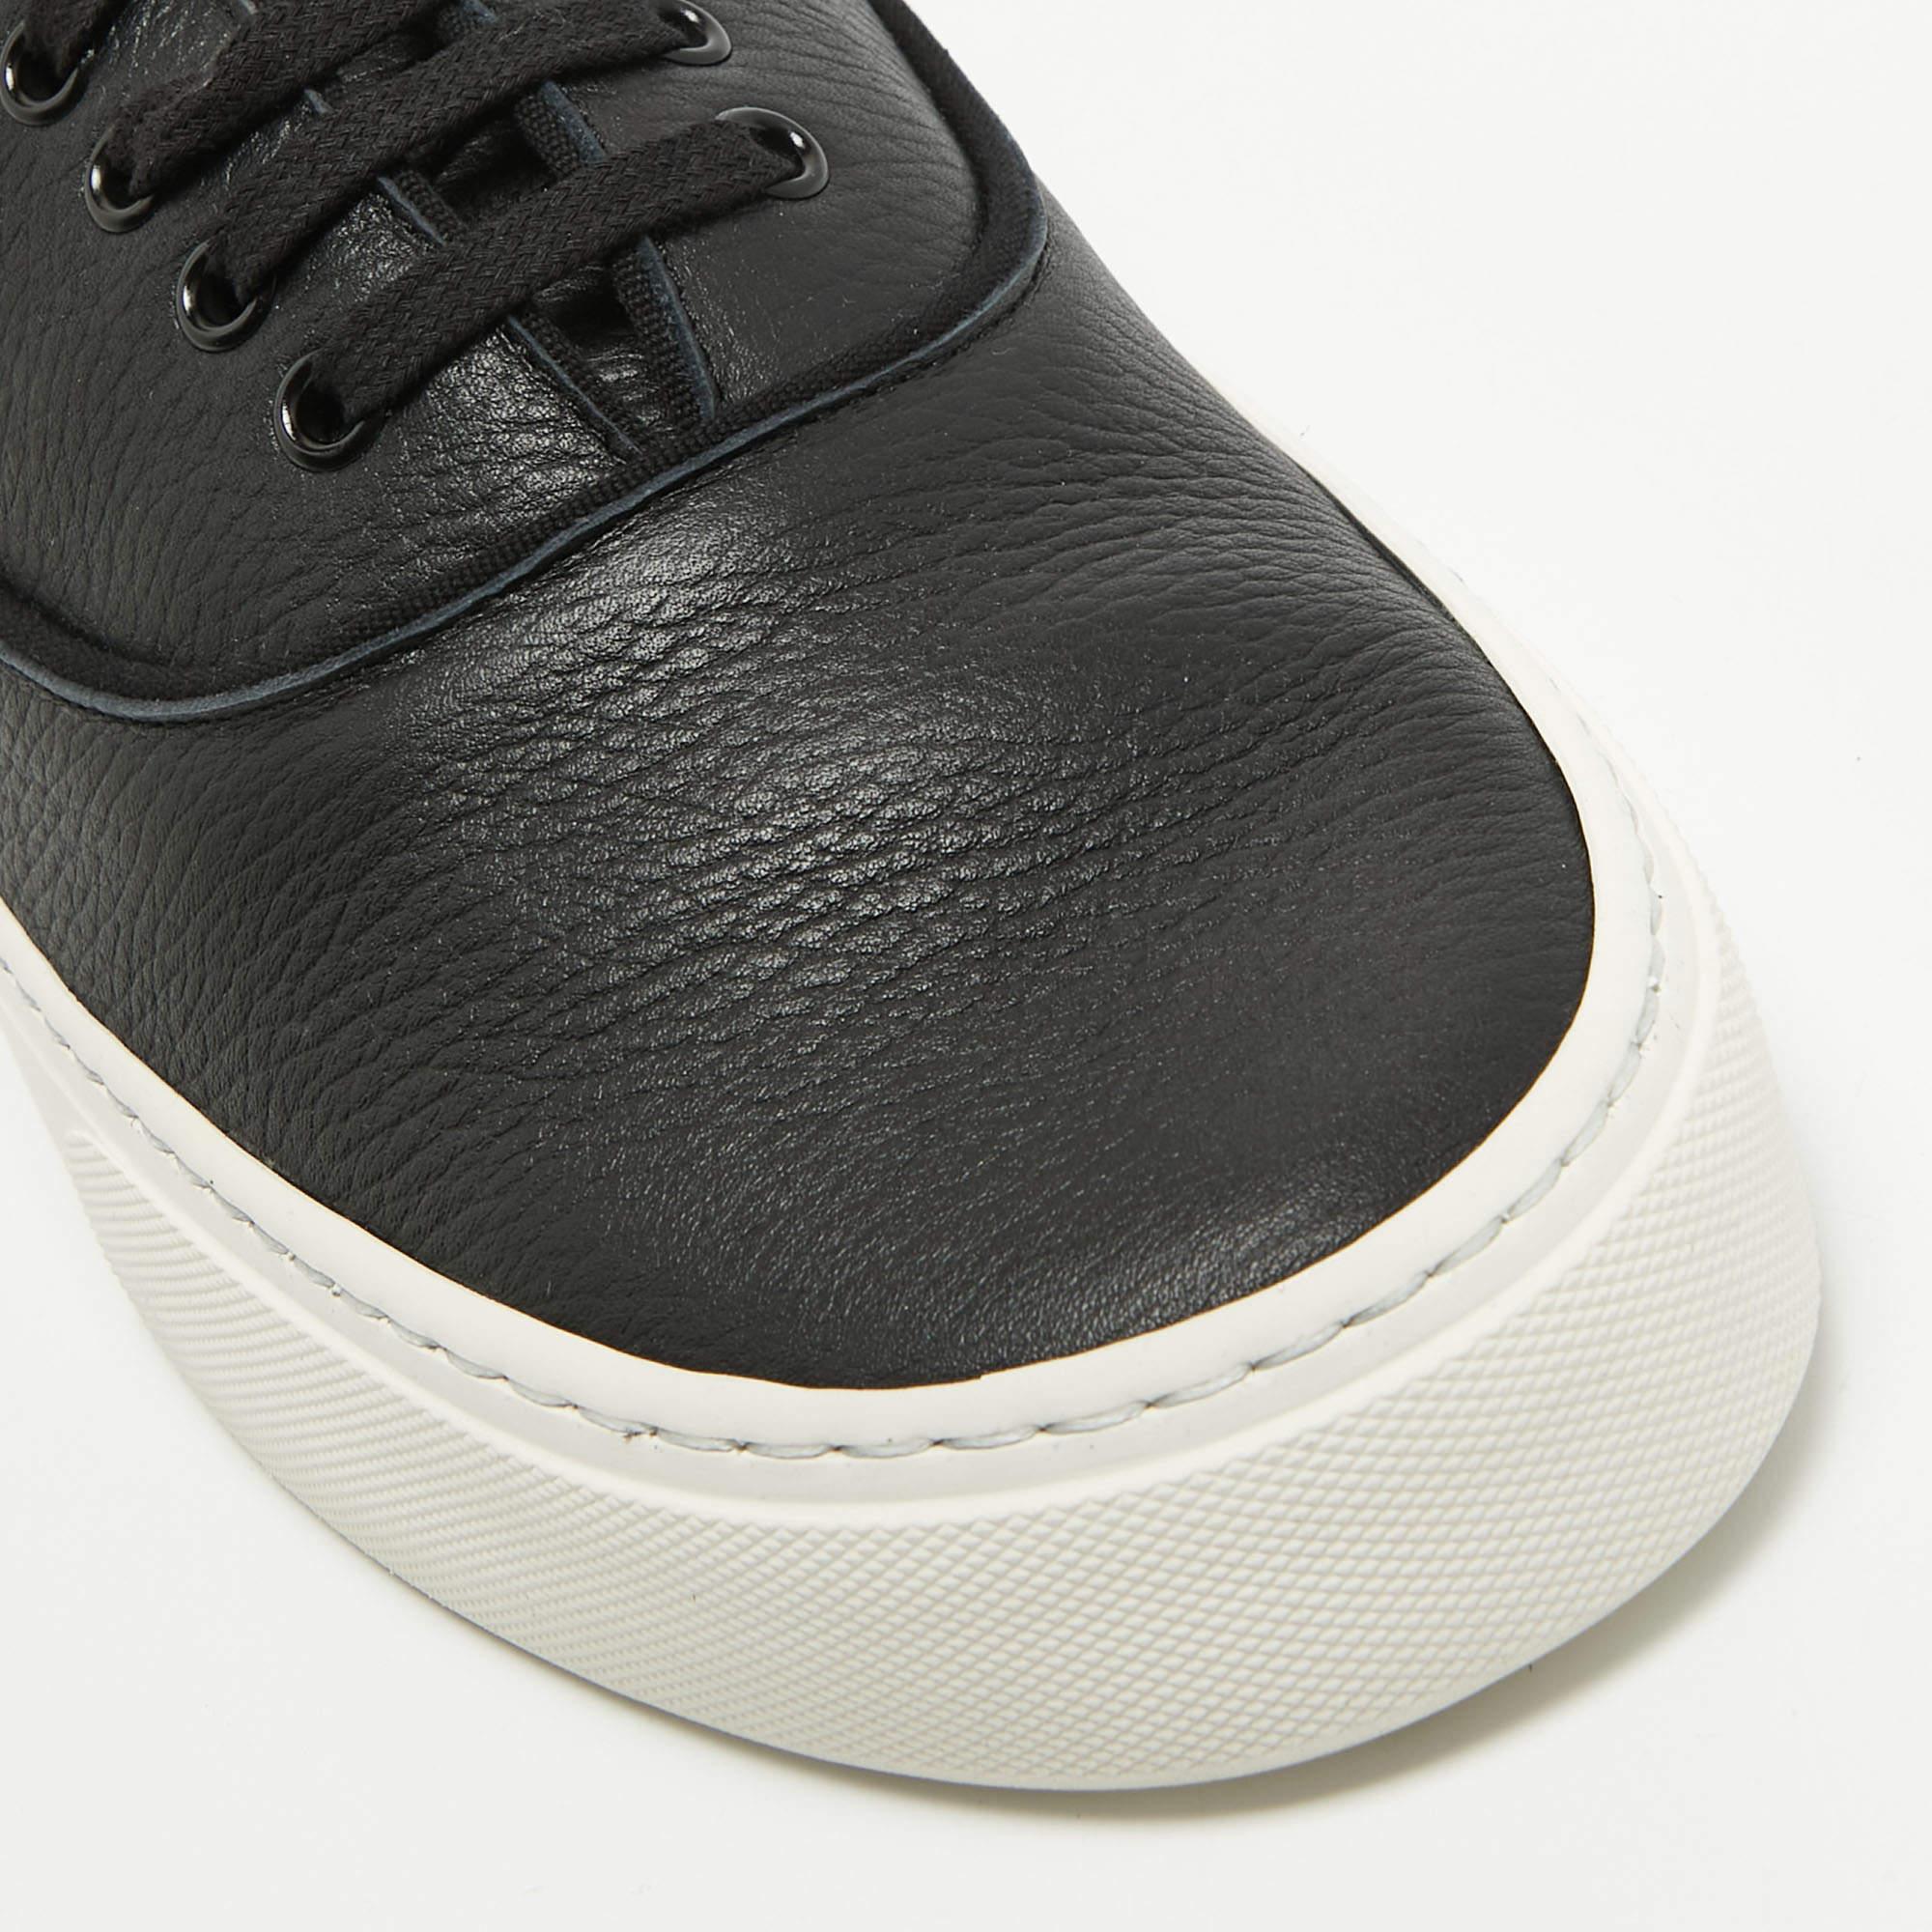 Saint Laurent Black Leather Low Top Sneakers Size 45 1